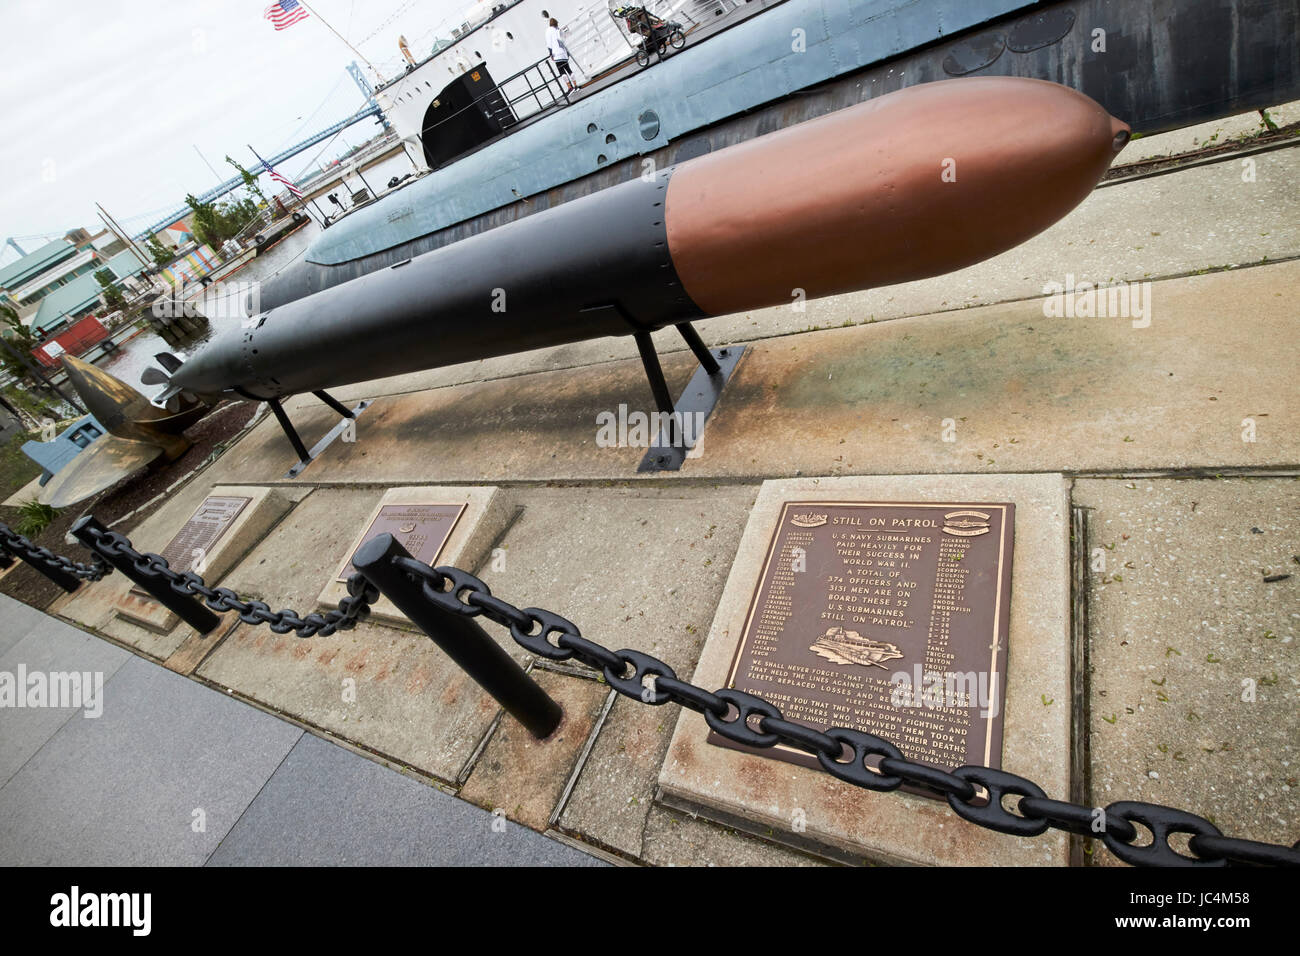 Torpille et submariner USS Becuna memorial ss-319 Indépendance Seaport Museum de Philadelphie USA dock Banque D'Images